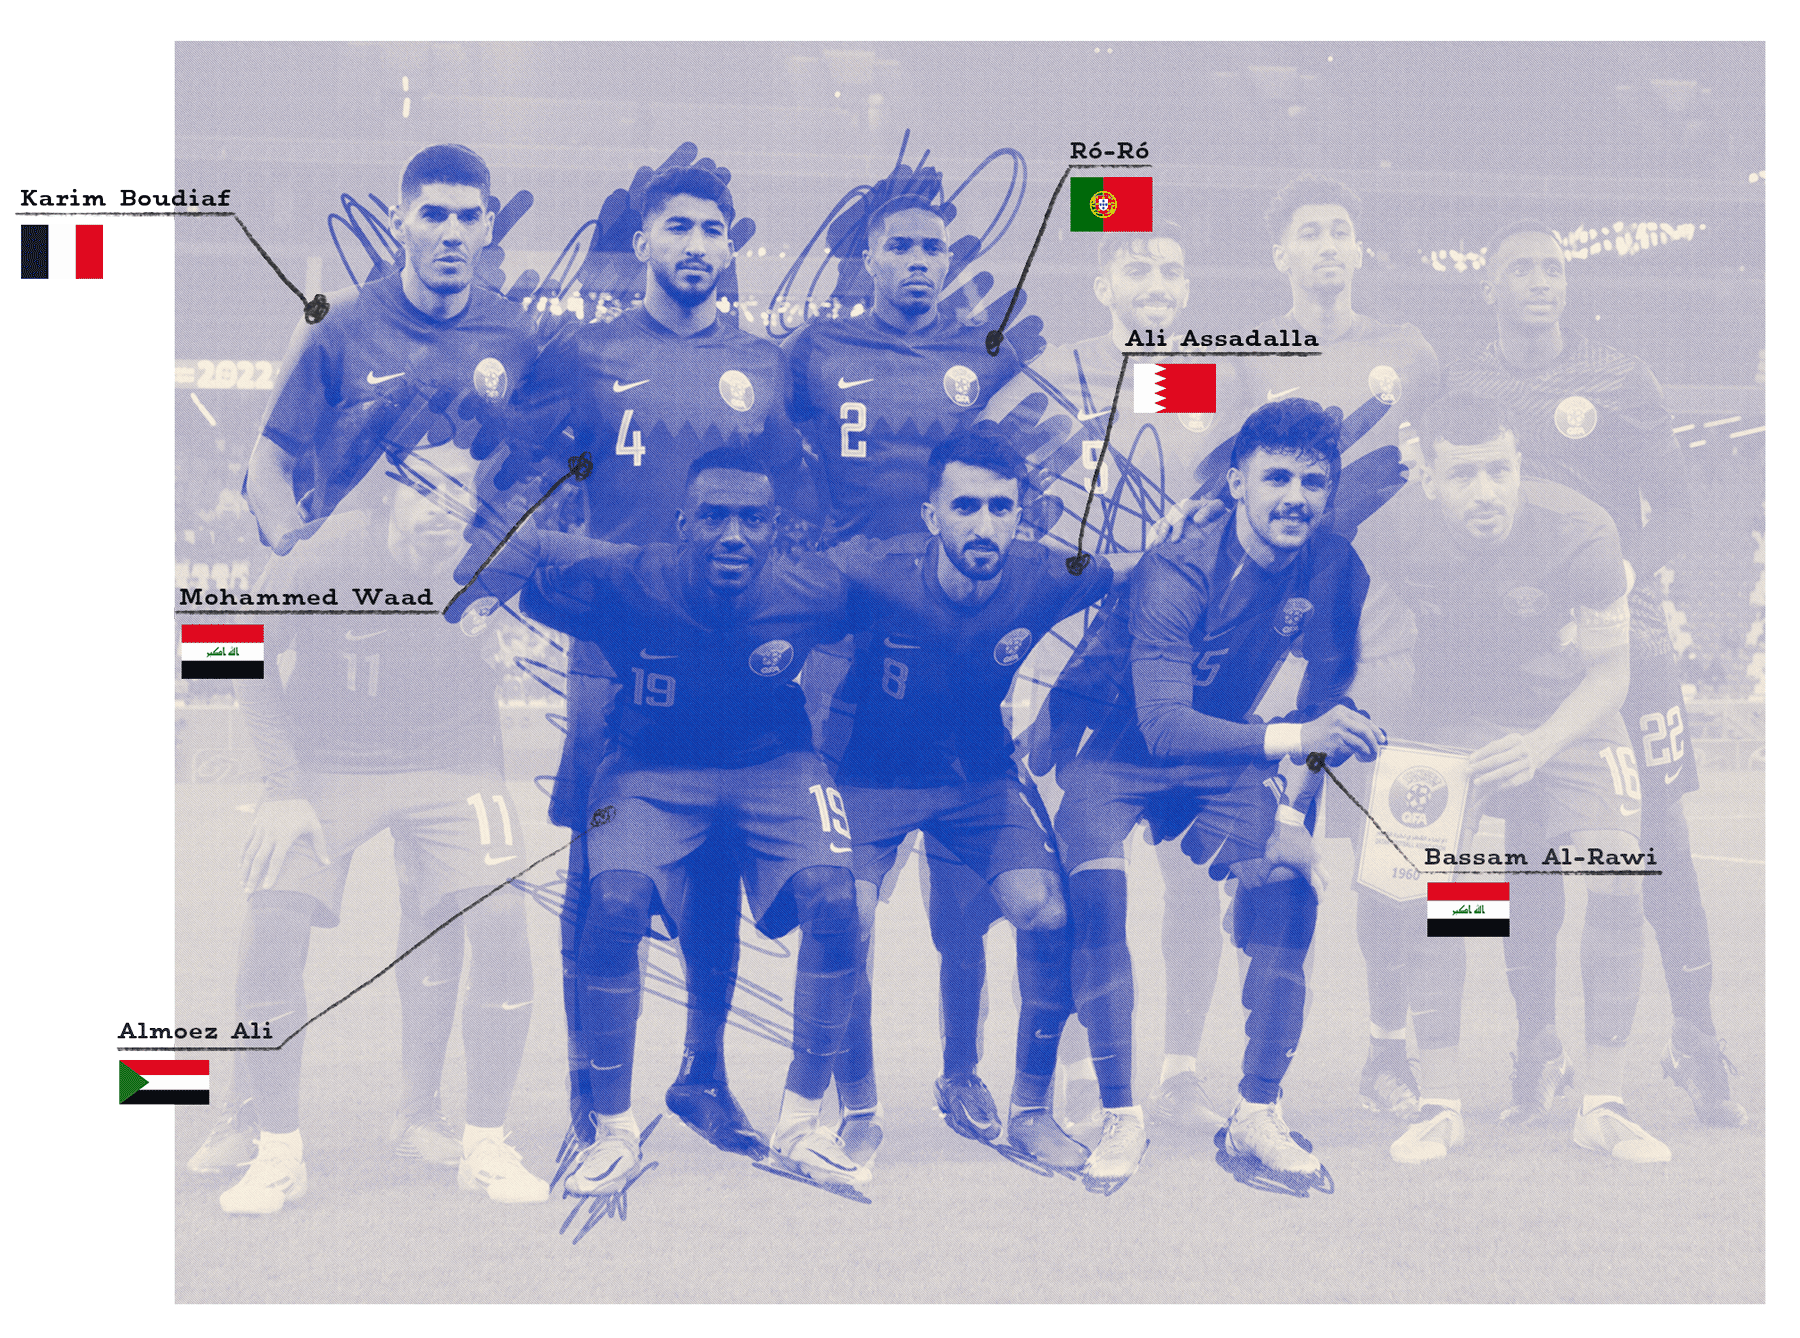 The 2022 Qatar squad has a fair share of foreign-born players.